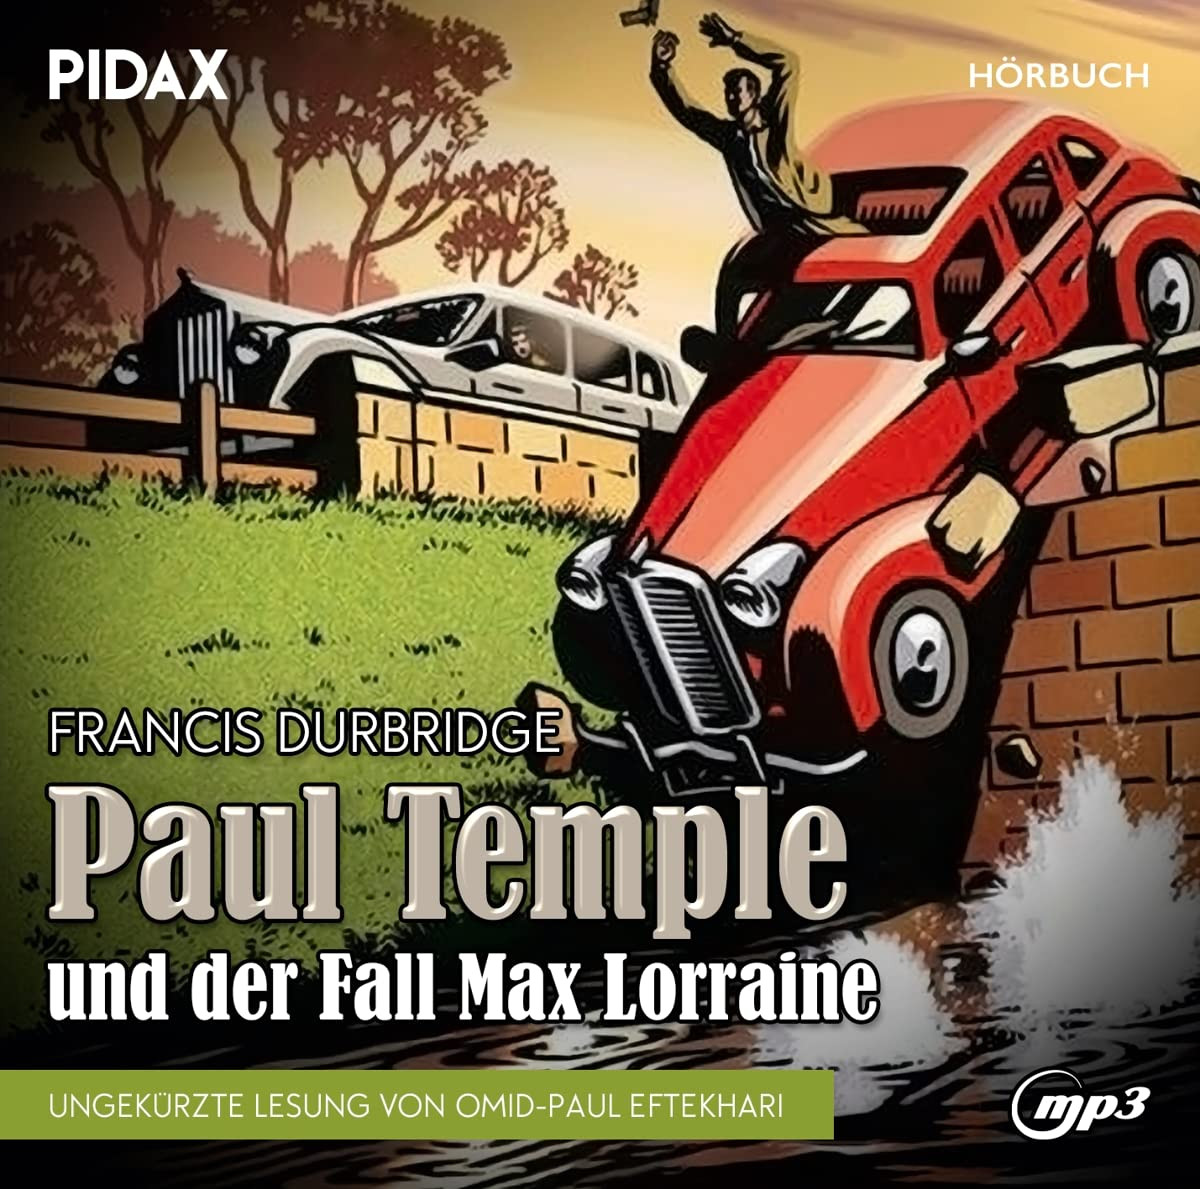 Pidax Hörspiel Klassiker - Francis Durbridge: Paul Temple und der Fall Max Lorraine